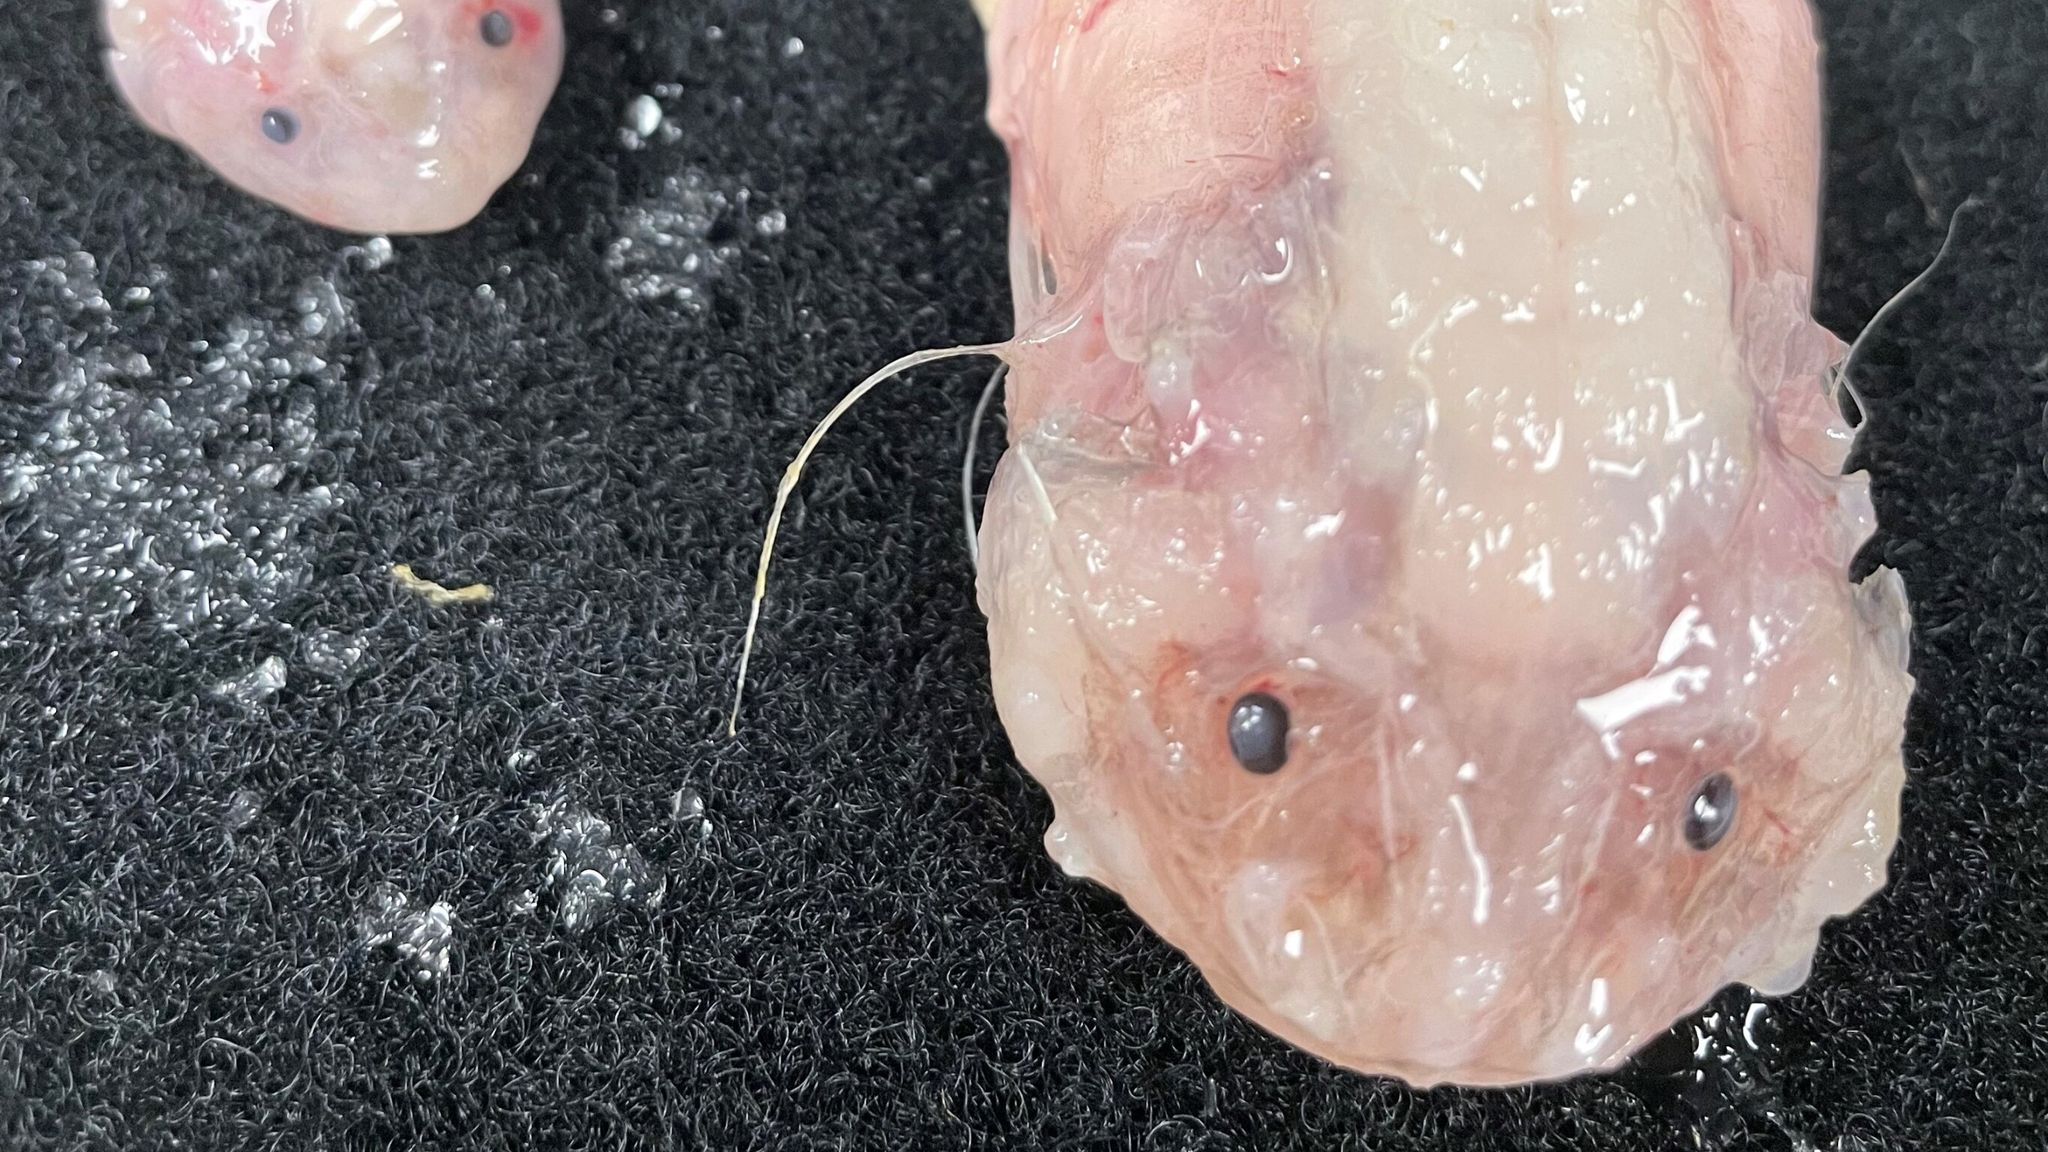 Free: Blobfish Animal Deep sea creature Deep sea fish - blobfish